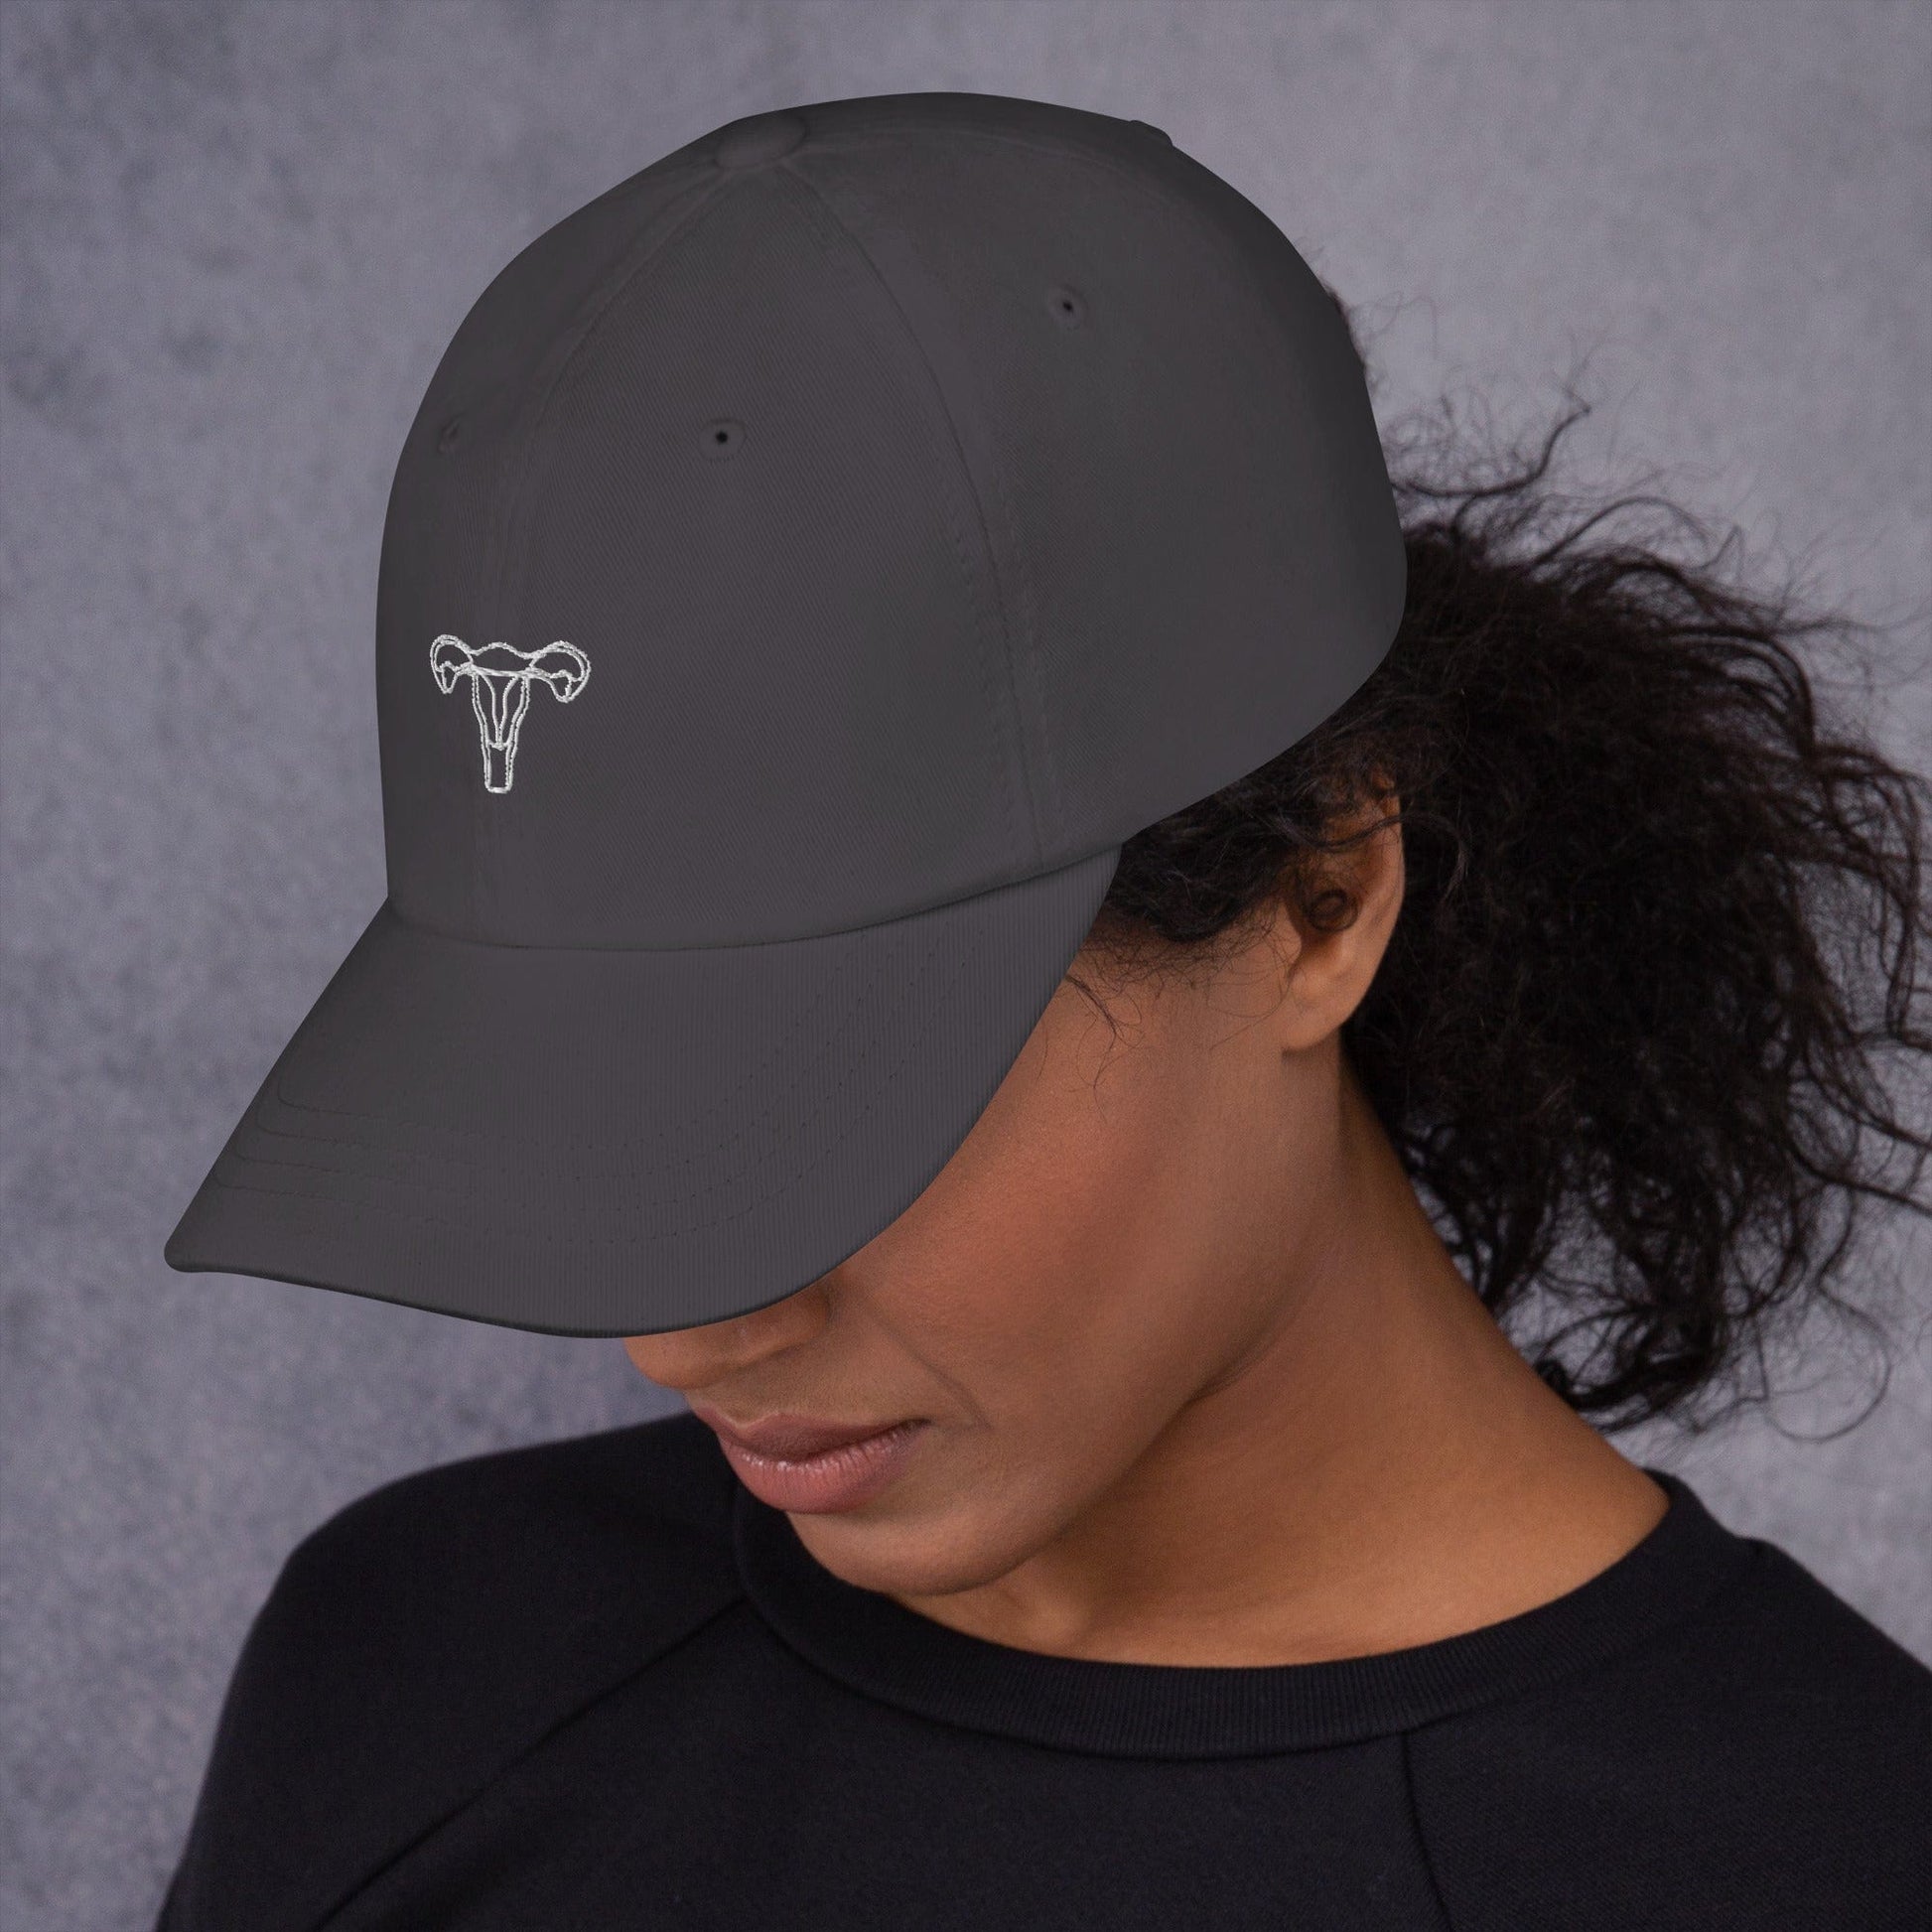 woman-wearing-unisex-uterus-embroidered-feminist-cap-hat-dark-grey-color-front